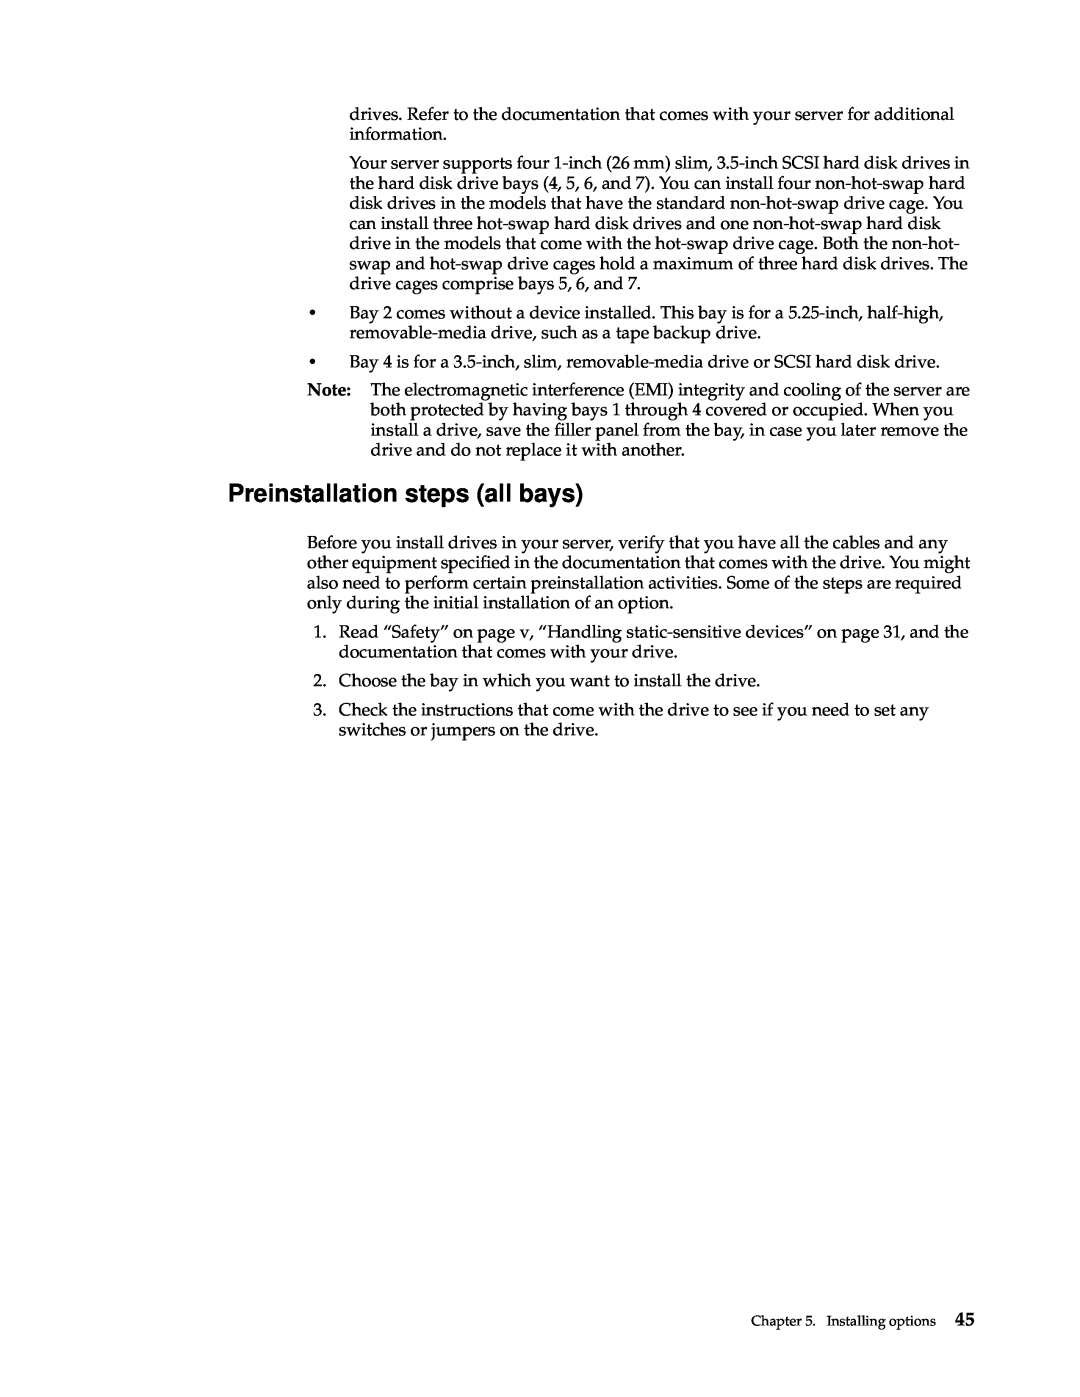 IBM 220 manual Preinstallation steps all bays 